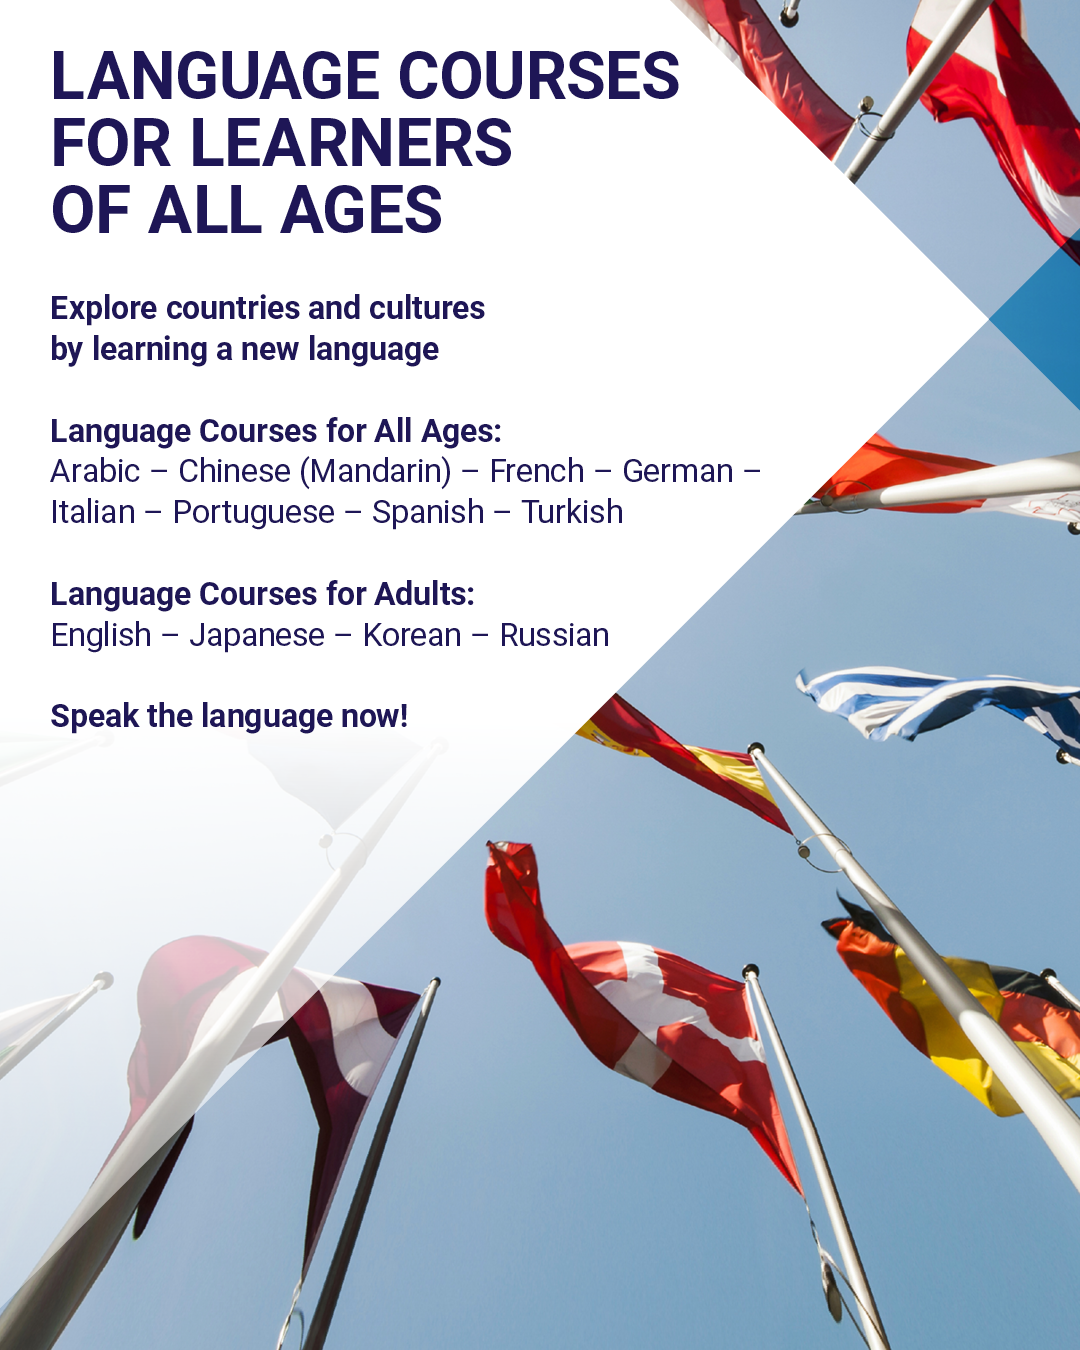 HBKU’s TII Announces Language Courses for Spring 2023